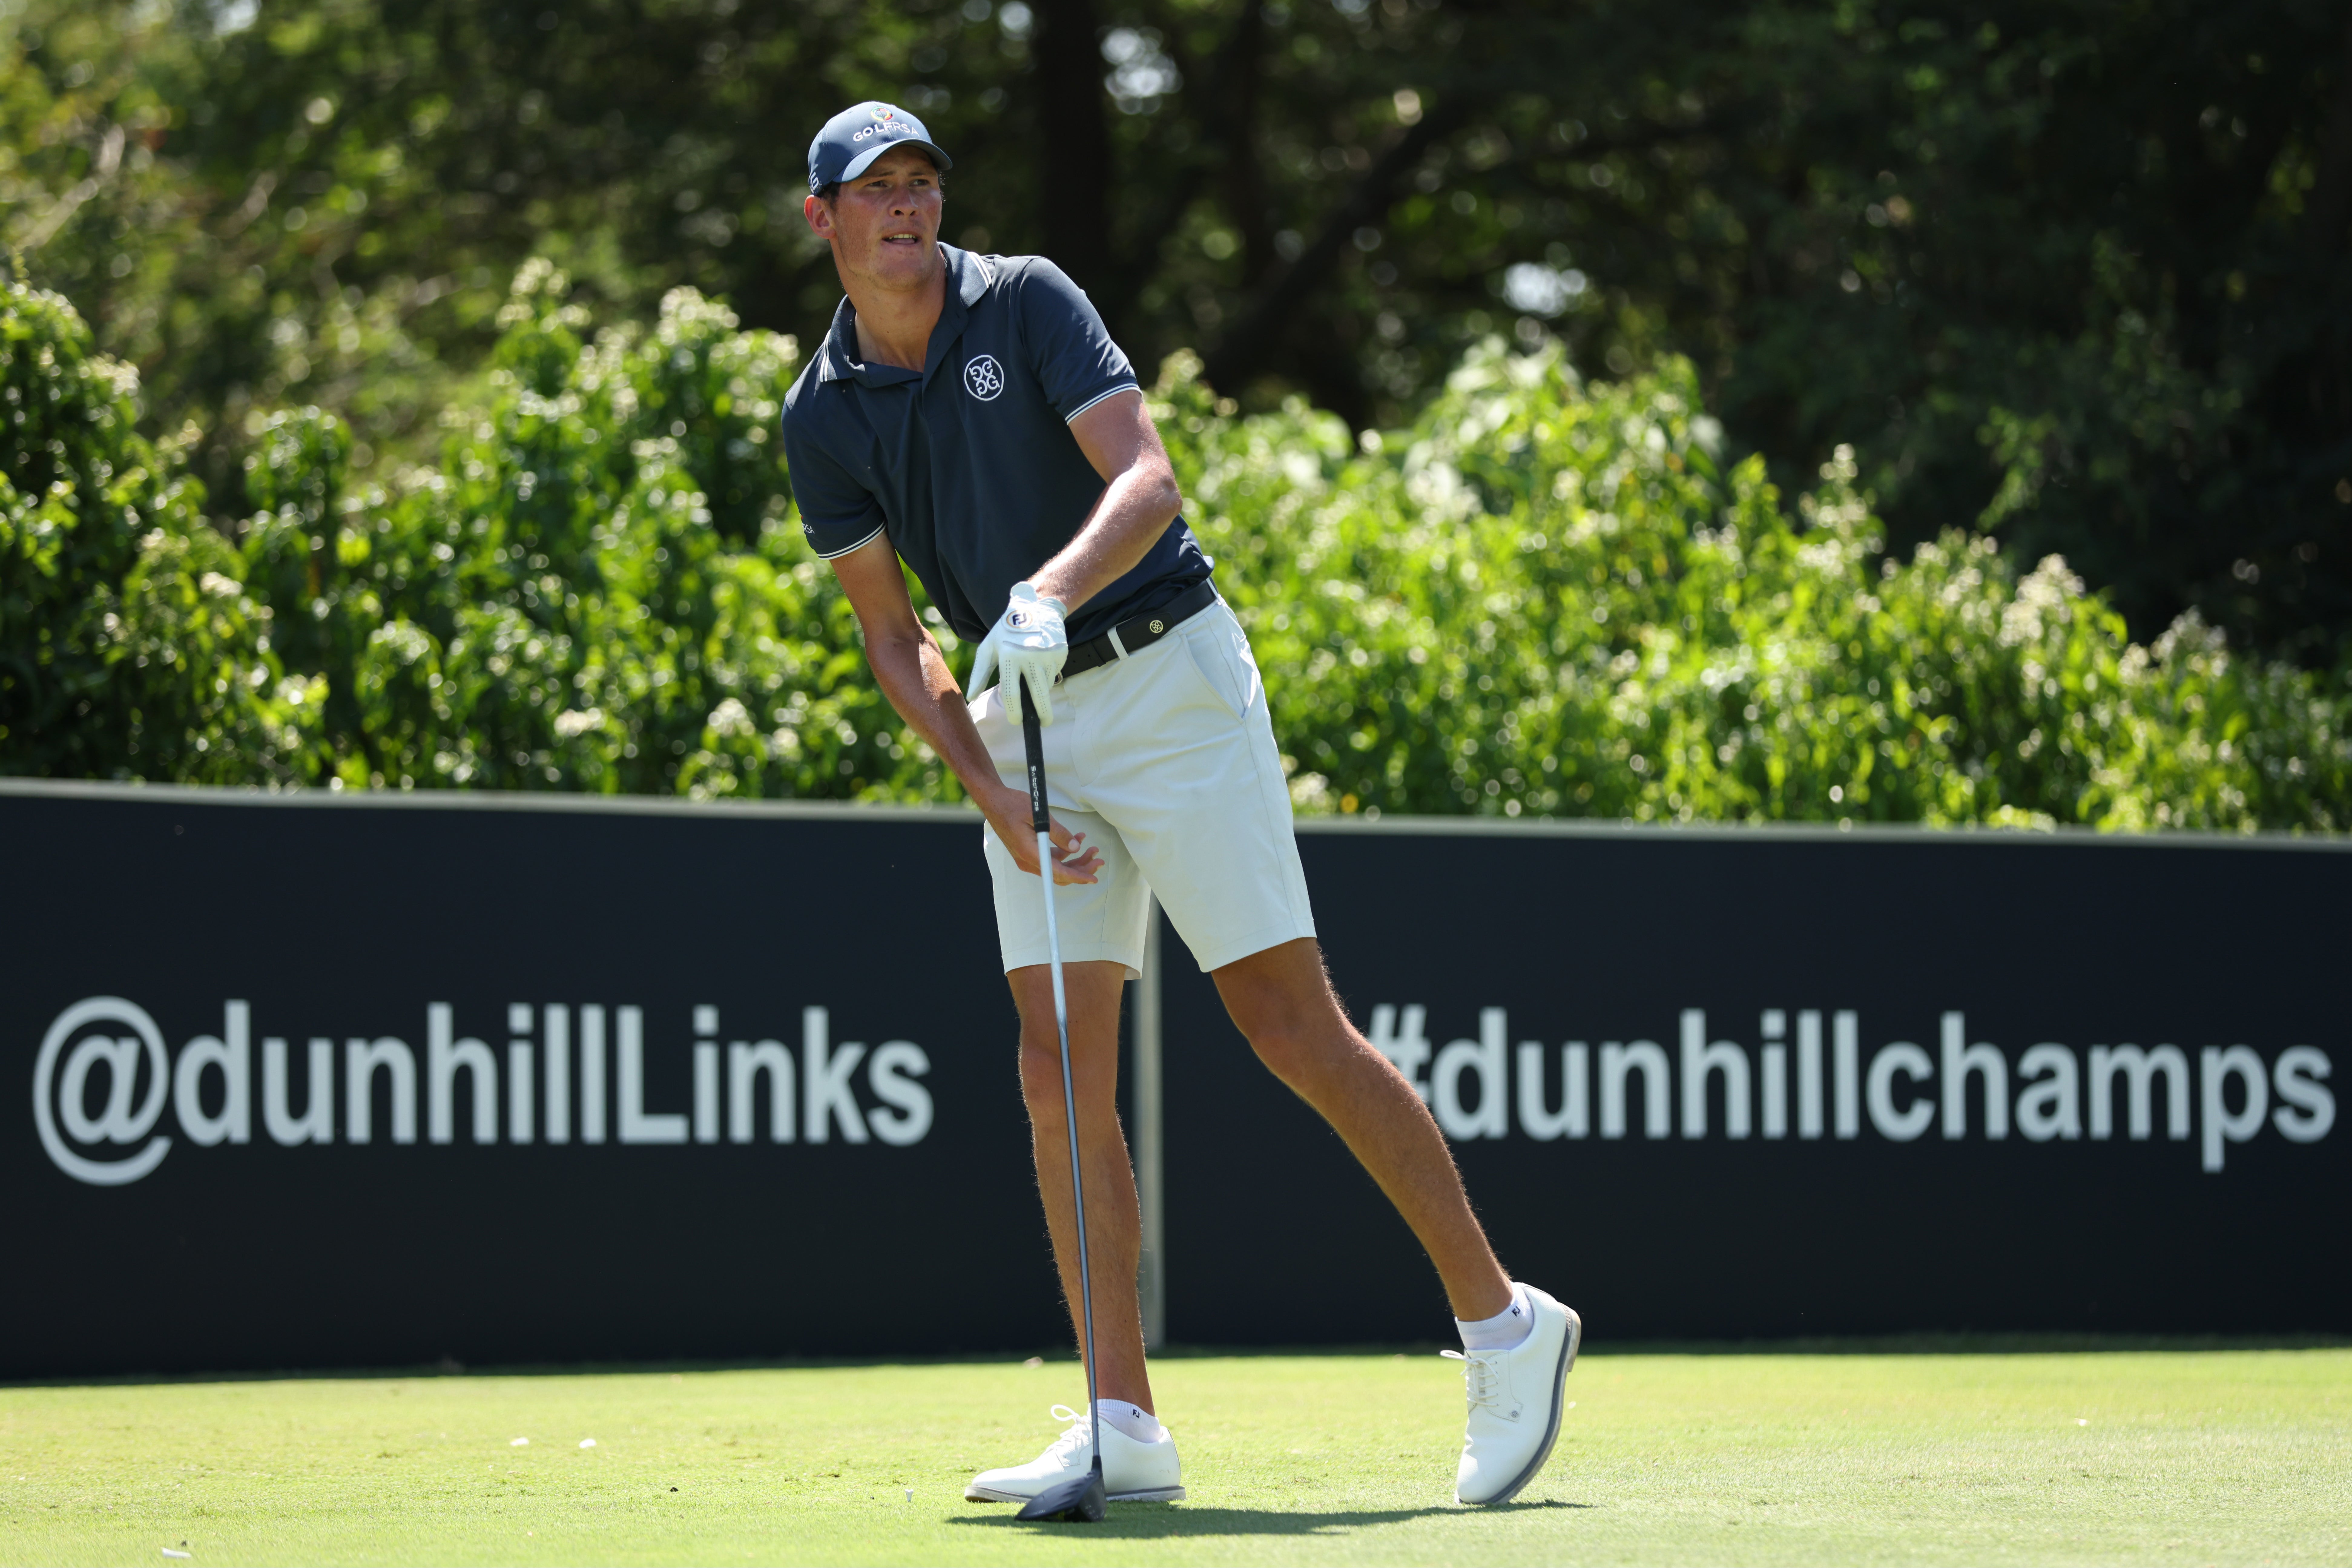 Christo Lamprecht is a rising star of golf